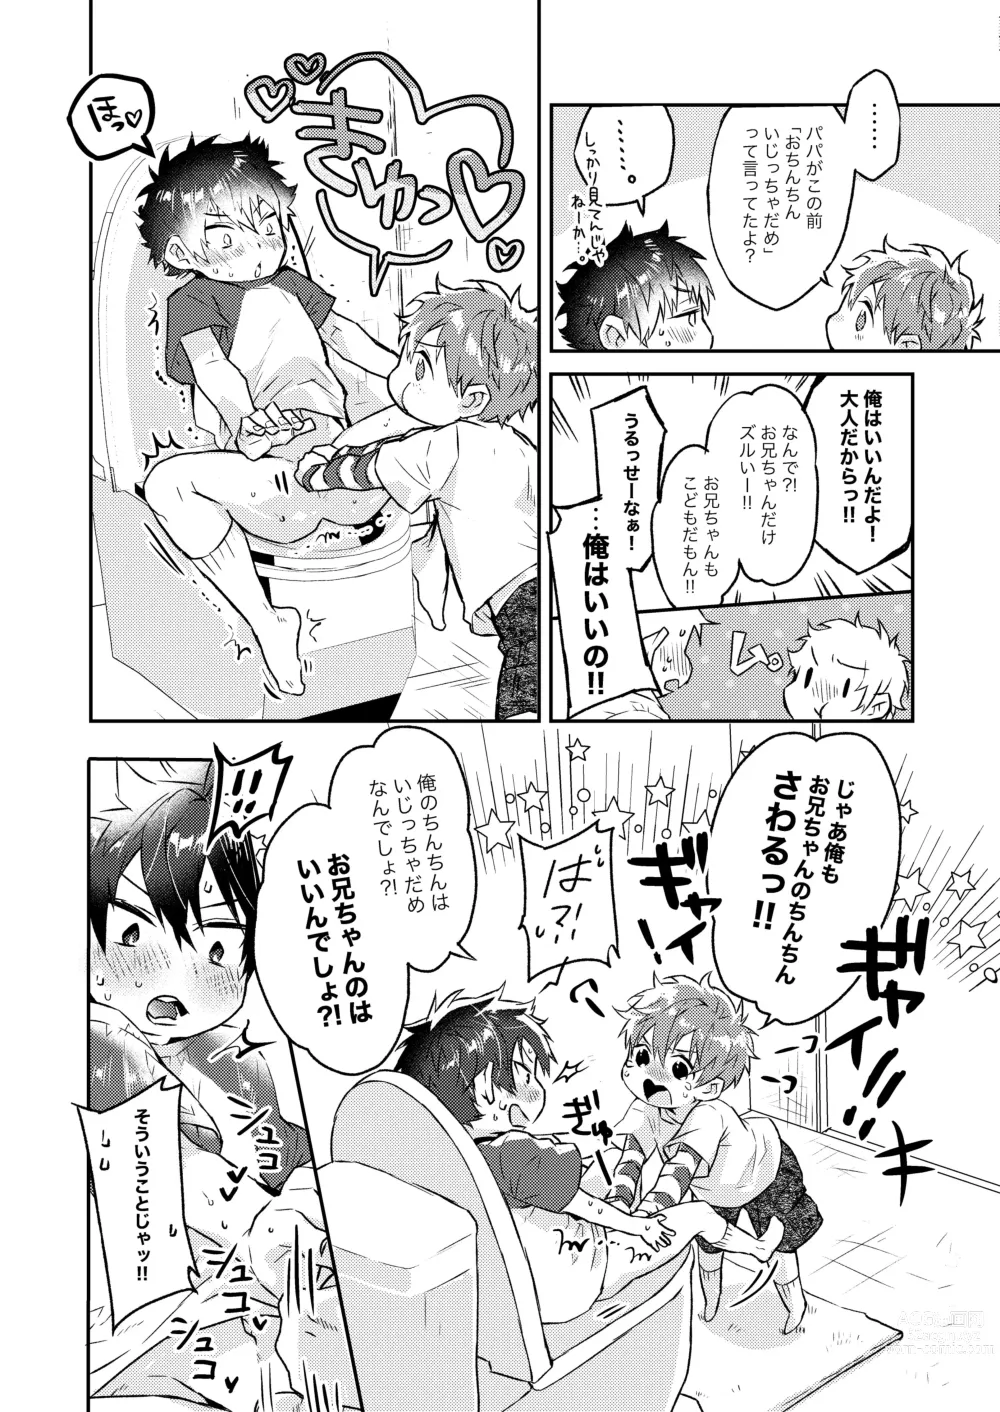 Page 29 of doujinshi Shota Sextet 6